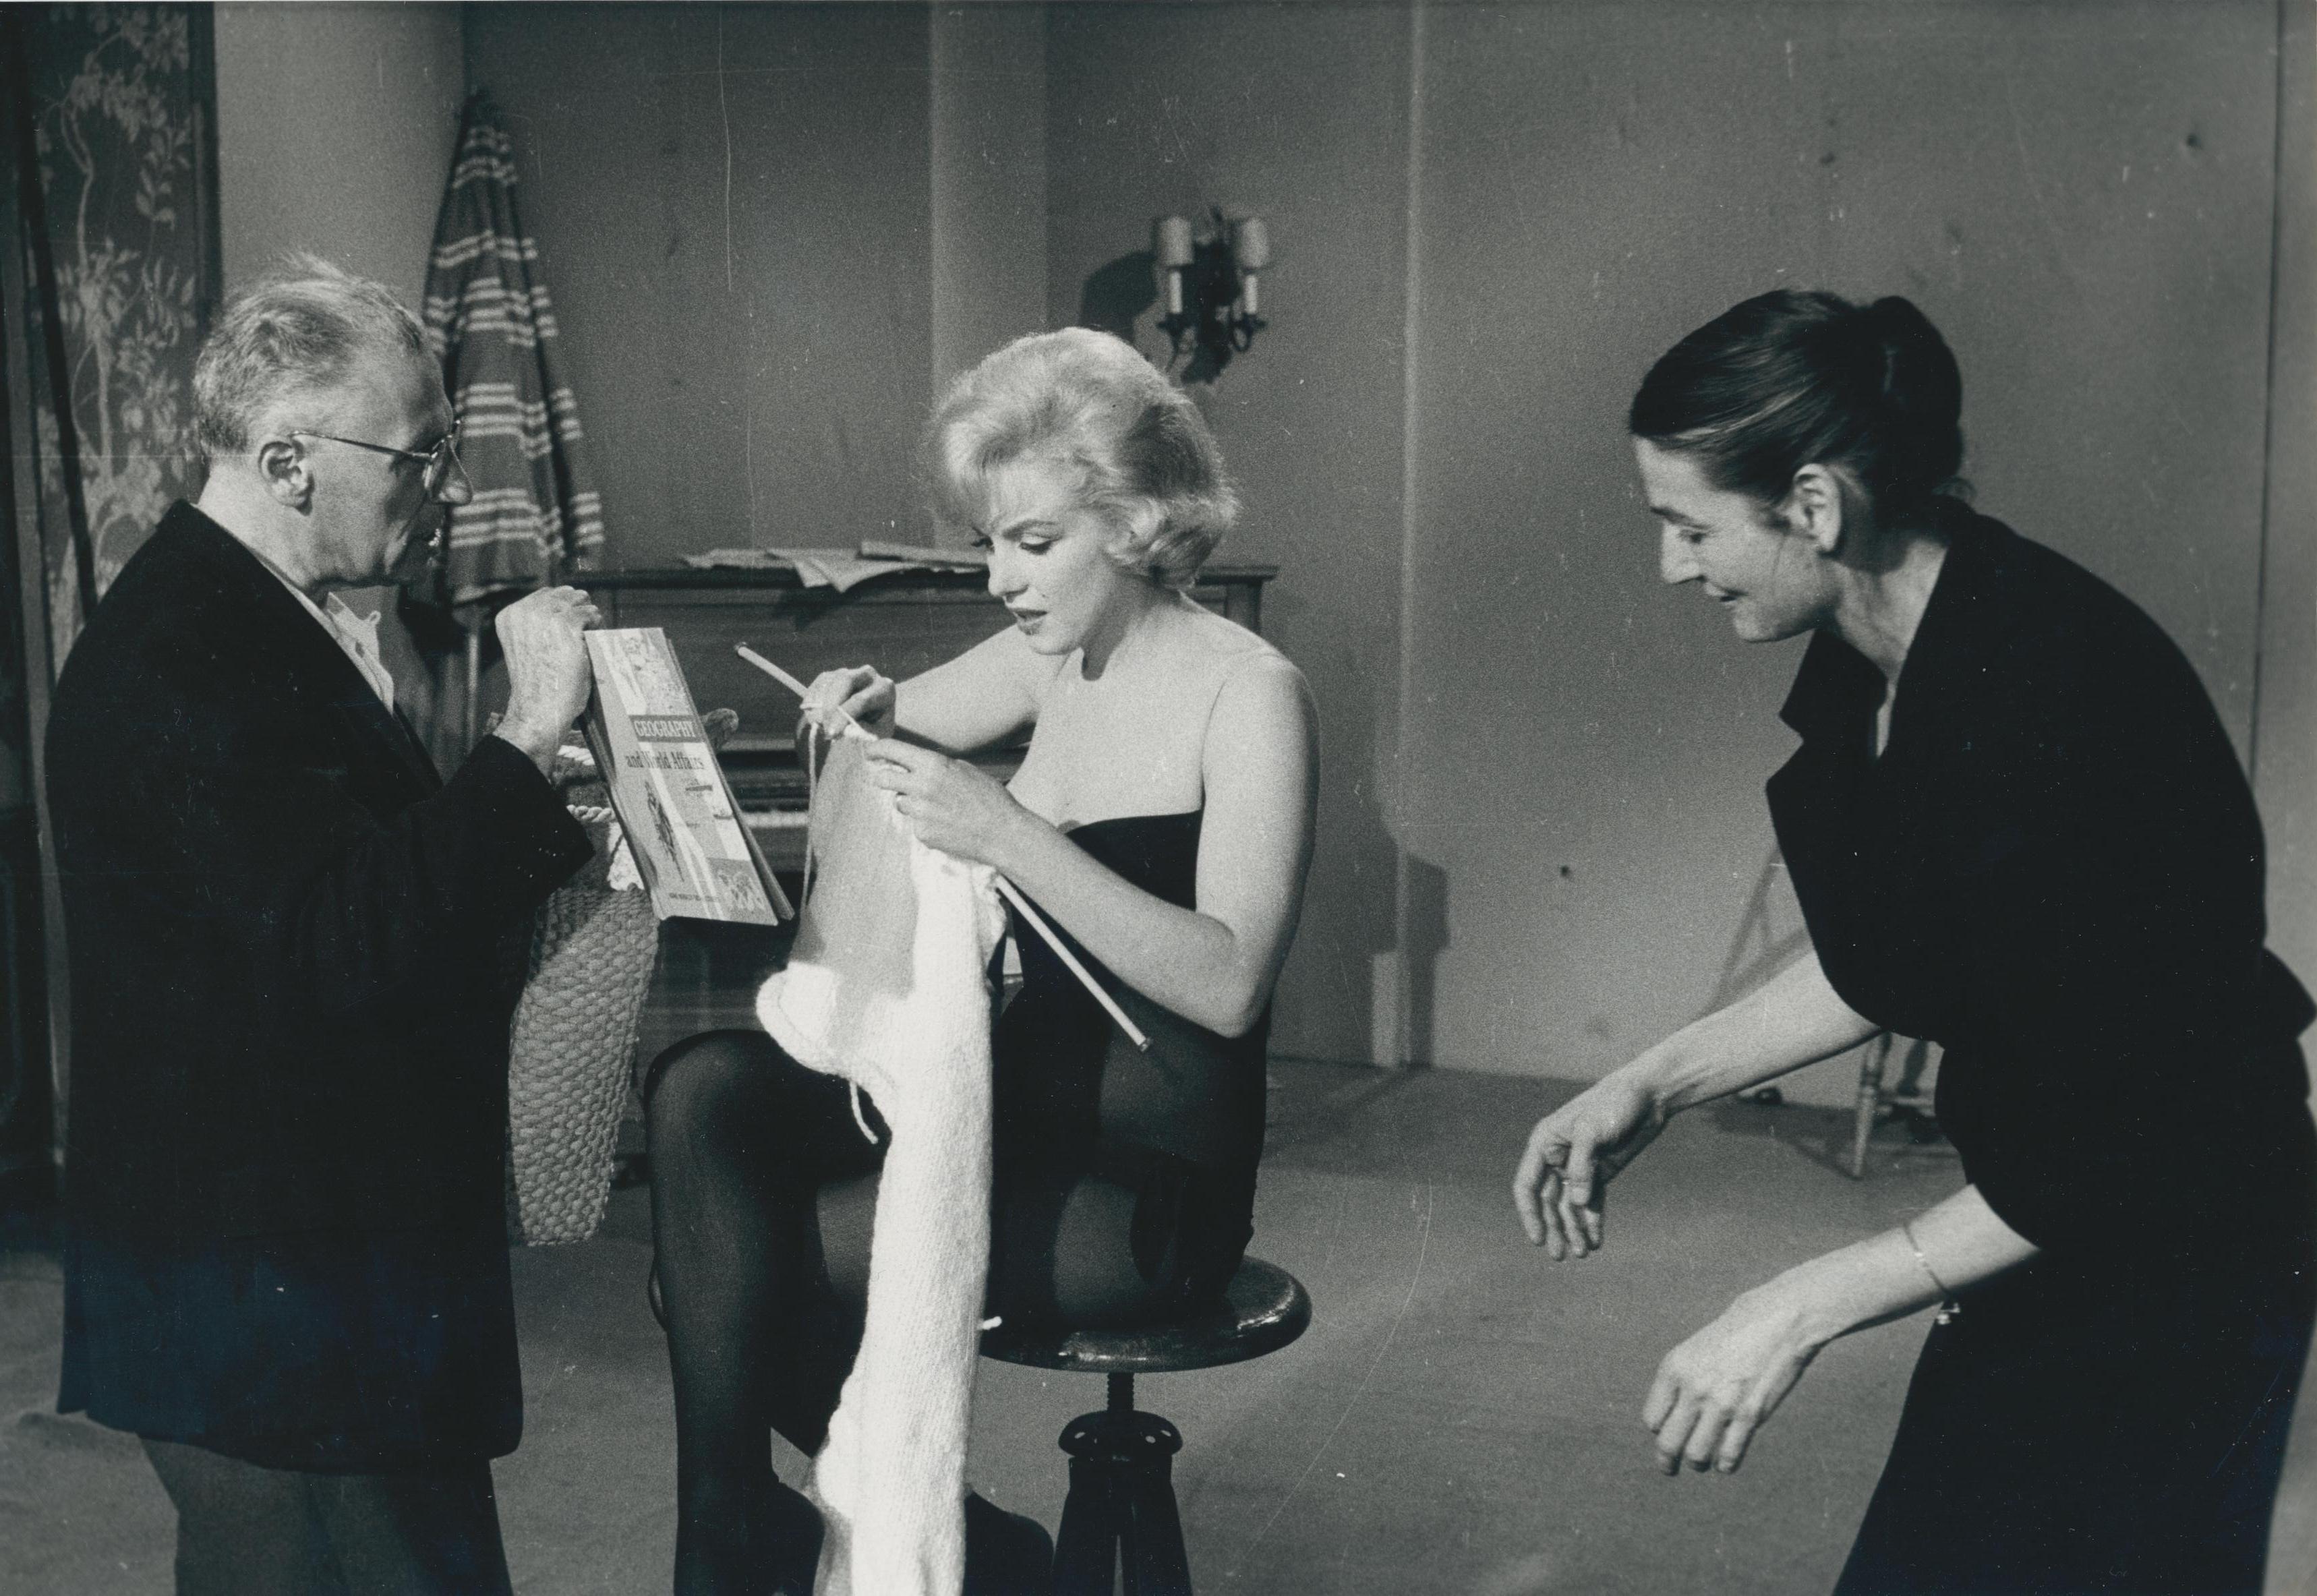 John Bryson Black and White Photograph - Marilyn Monroe knitting on set "Lets Make Love", USA, 1960